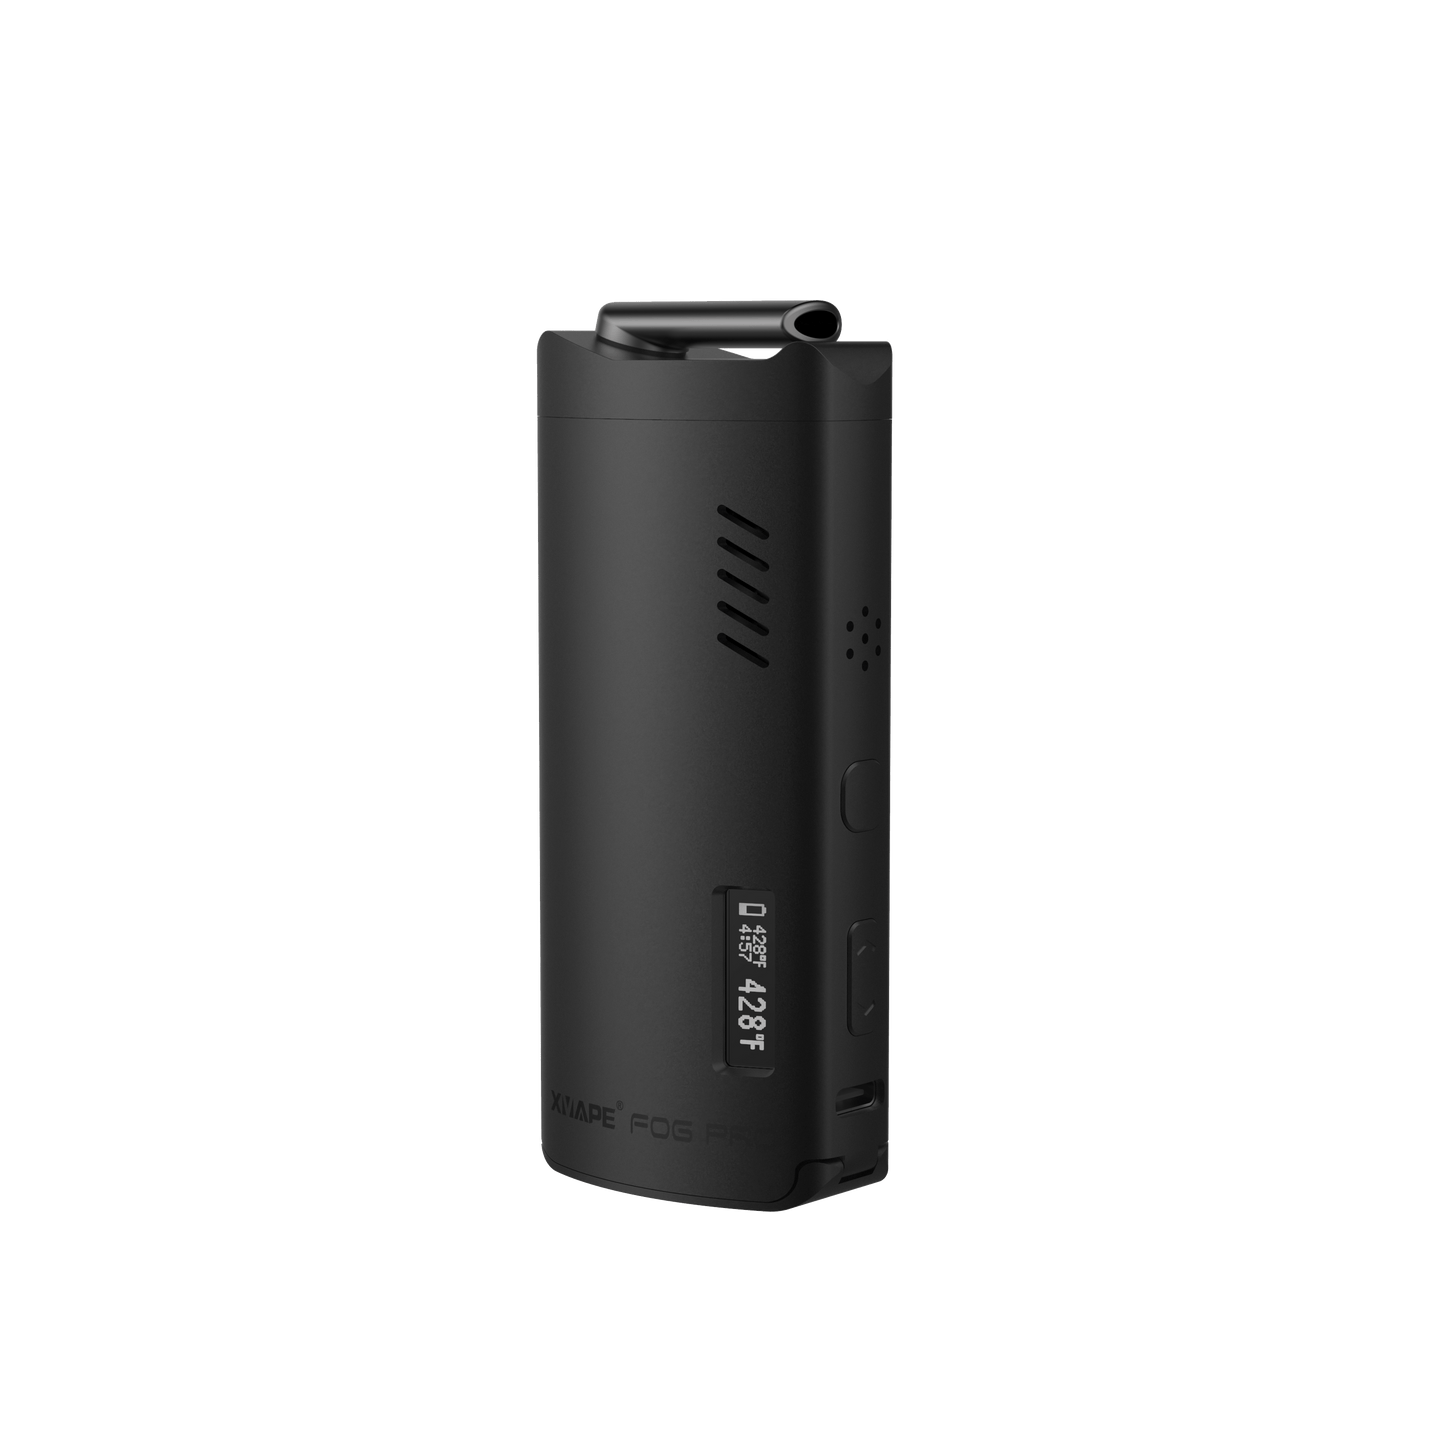 Xvape Fog Pro Vaporizer